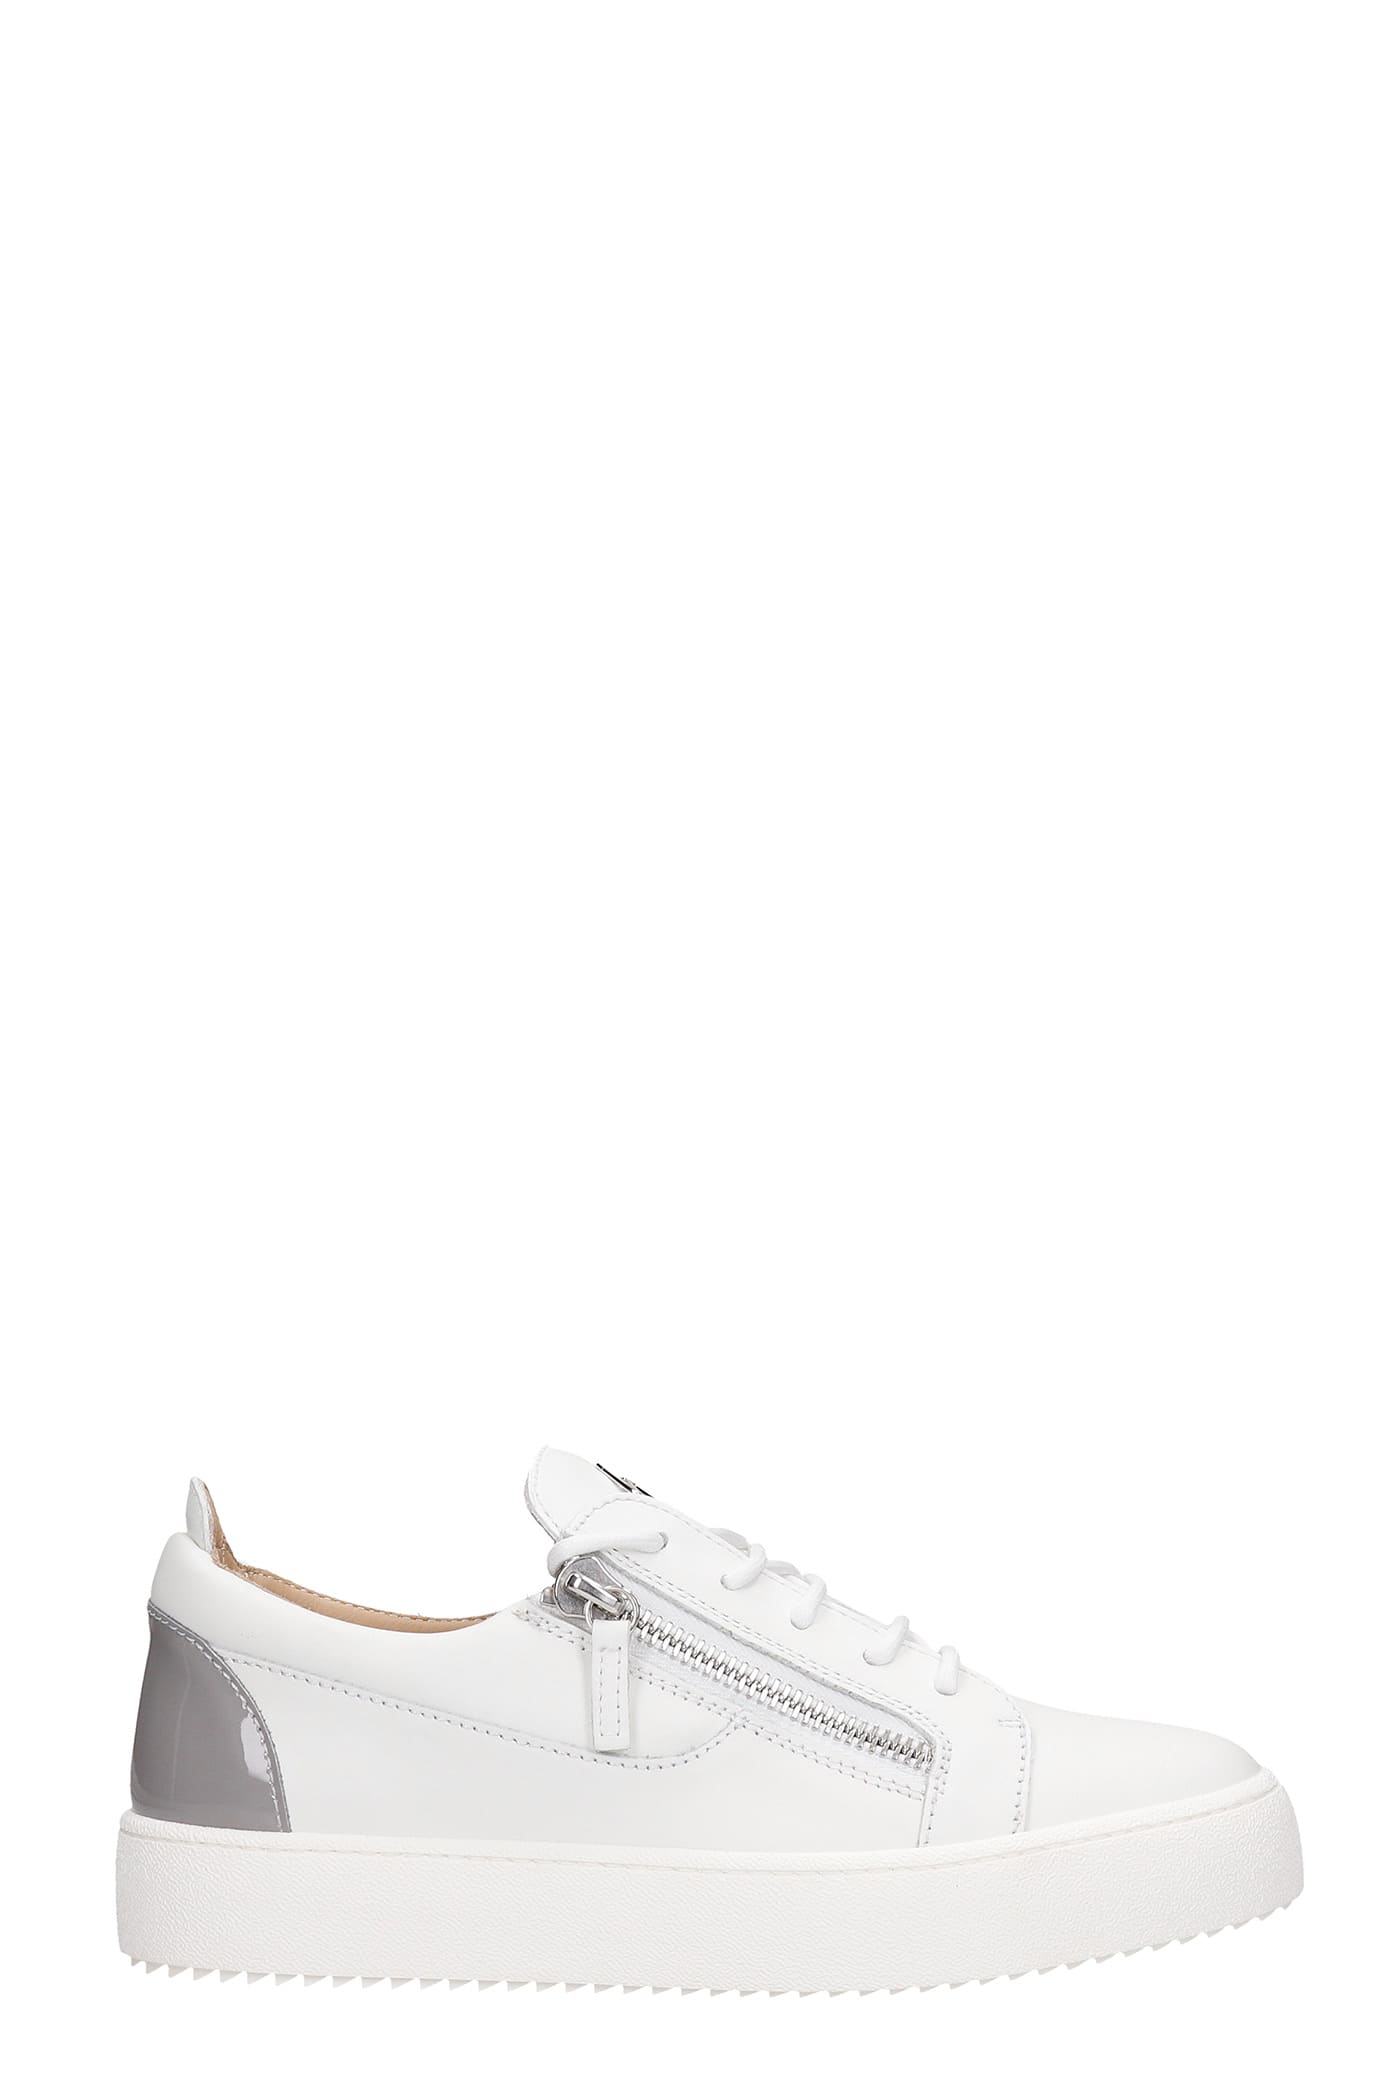 Giuseppe Zanotti Frankie Sneakers In White Leather